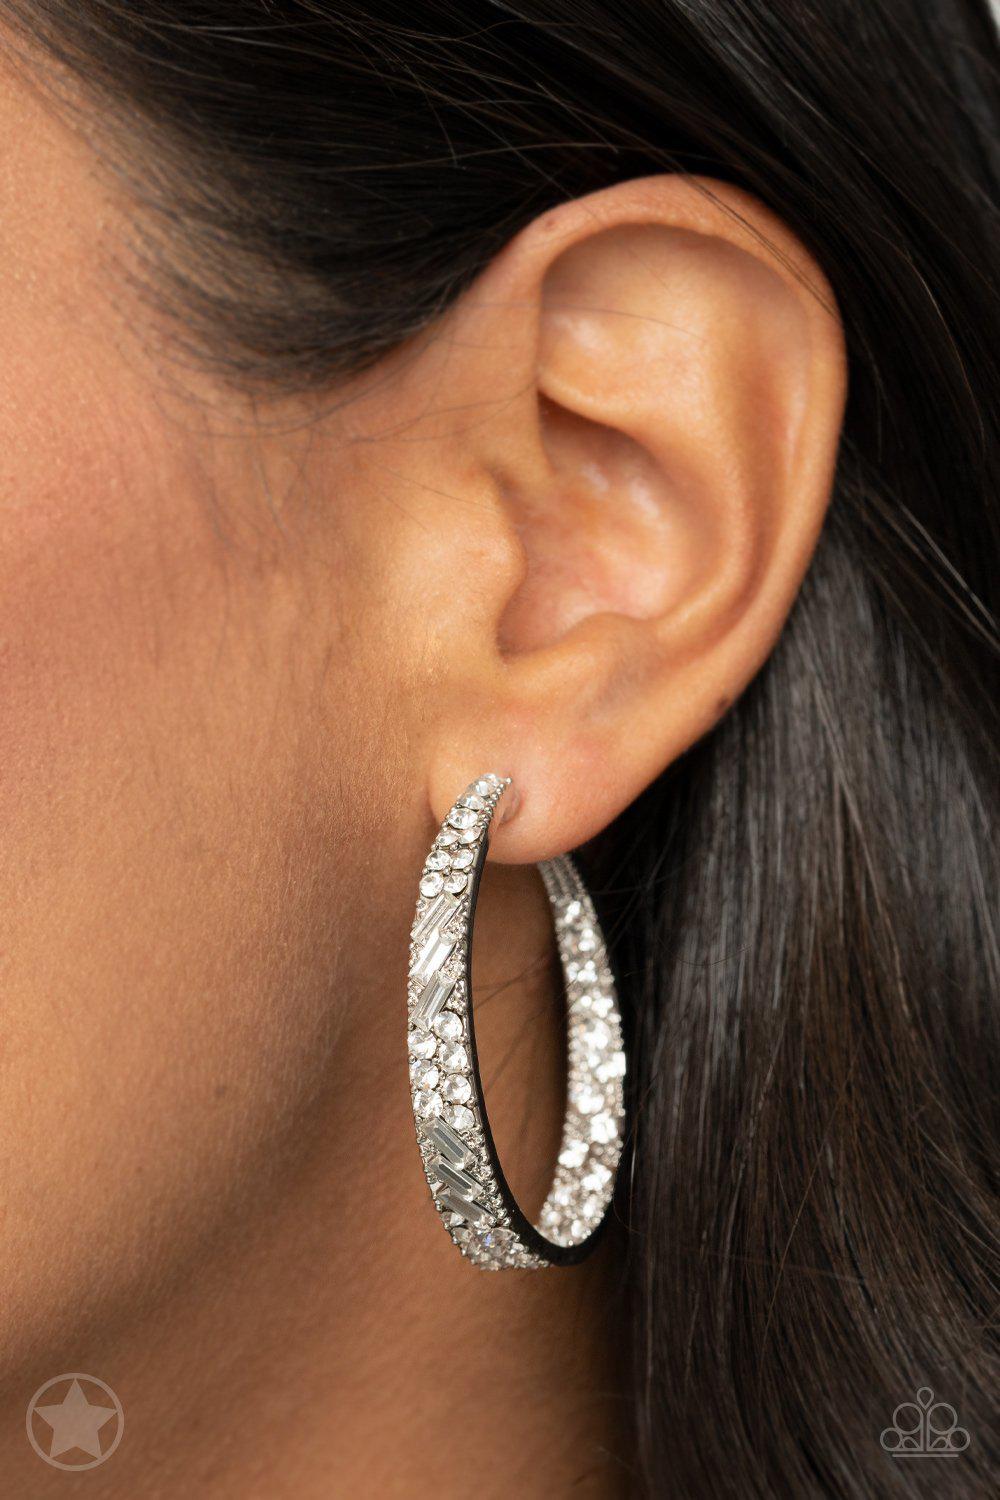 Glitzy by Association White Rhinestone Hoop Earrings - Paparazzi Accessories - lightbox -CarasShop.com - $5 Jewelry by Cara Jewels